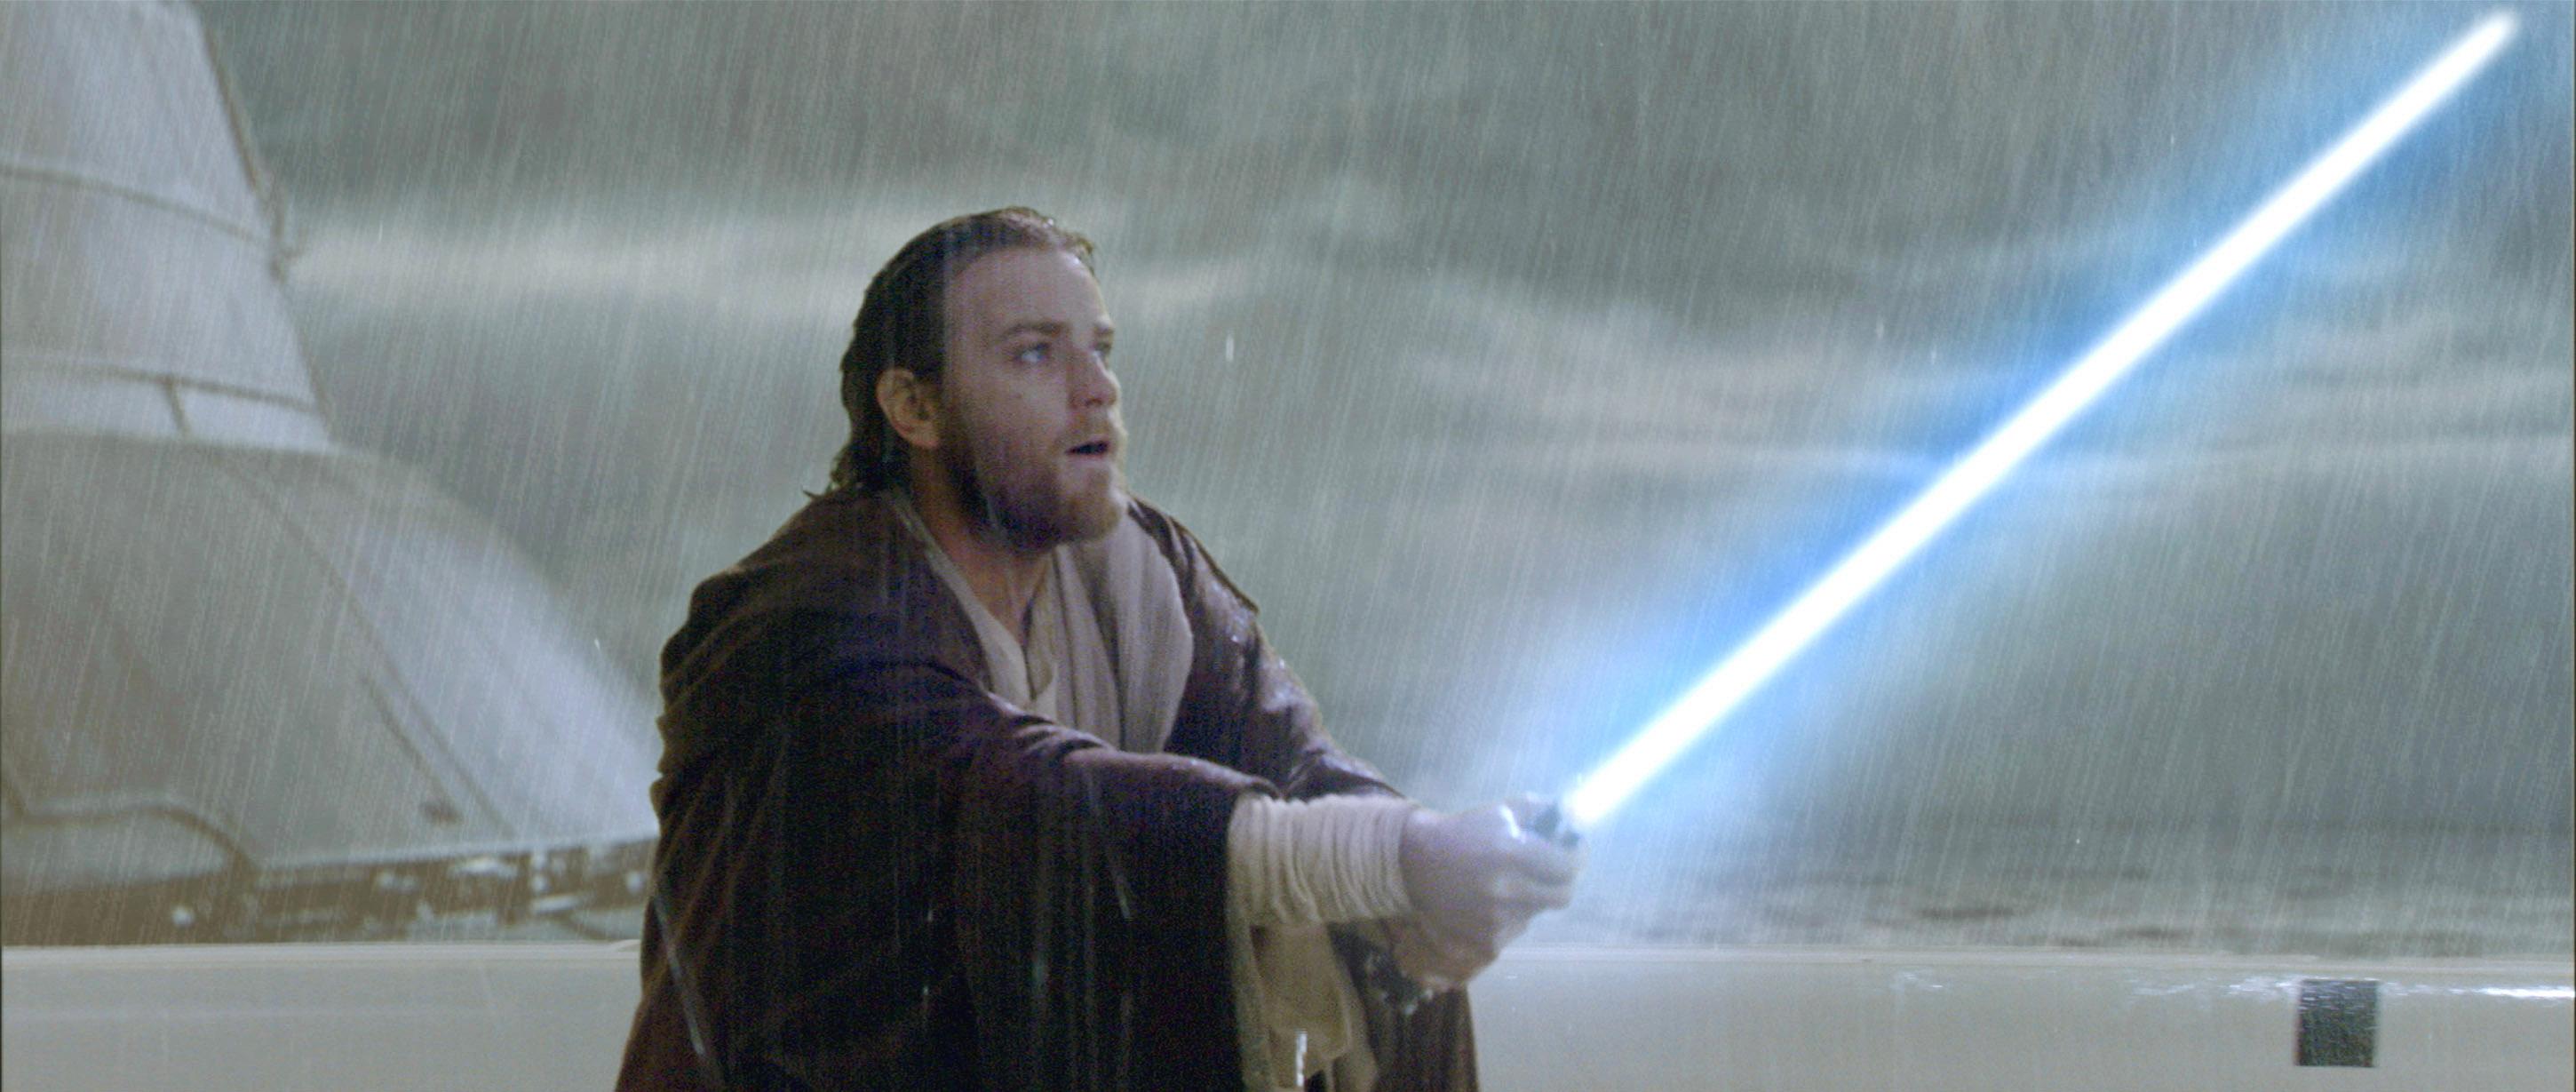 Star Wars' Confirms Ewan McGregor Starring Obi Wan Kenobi Series